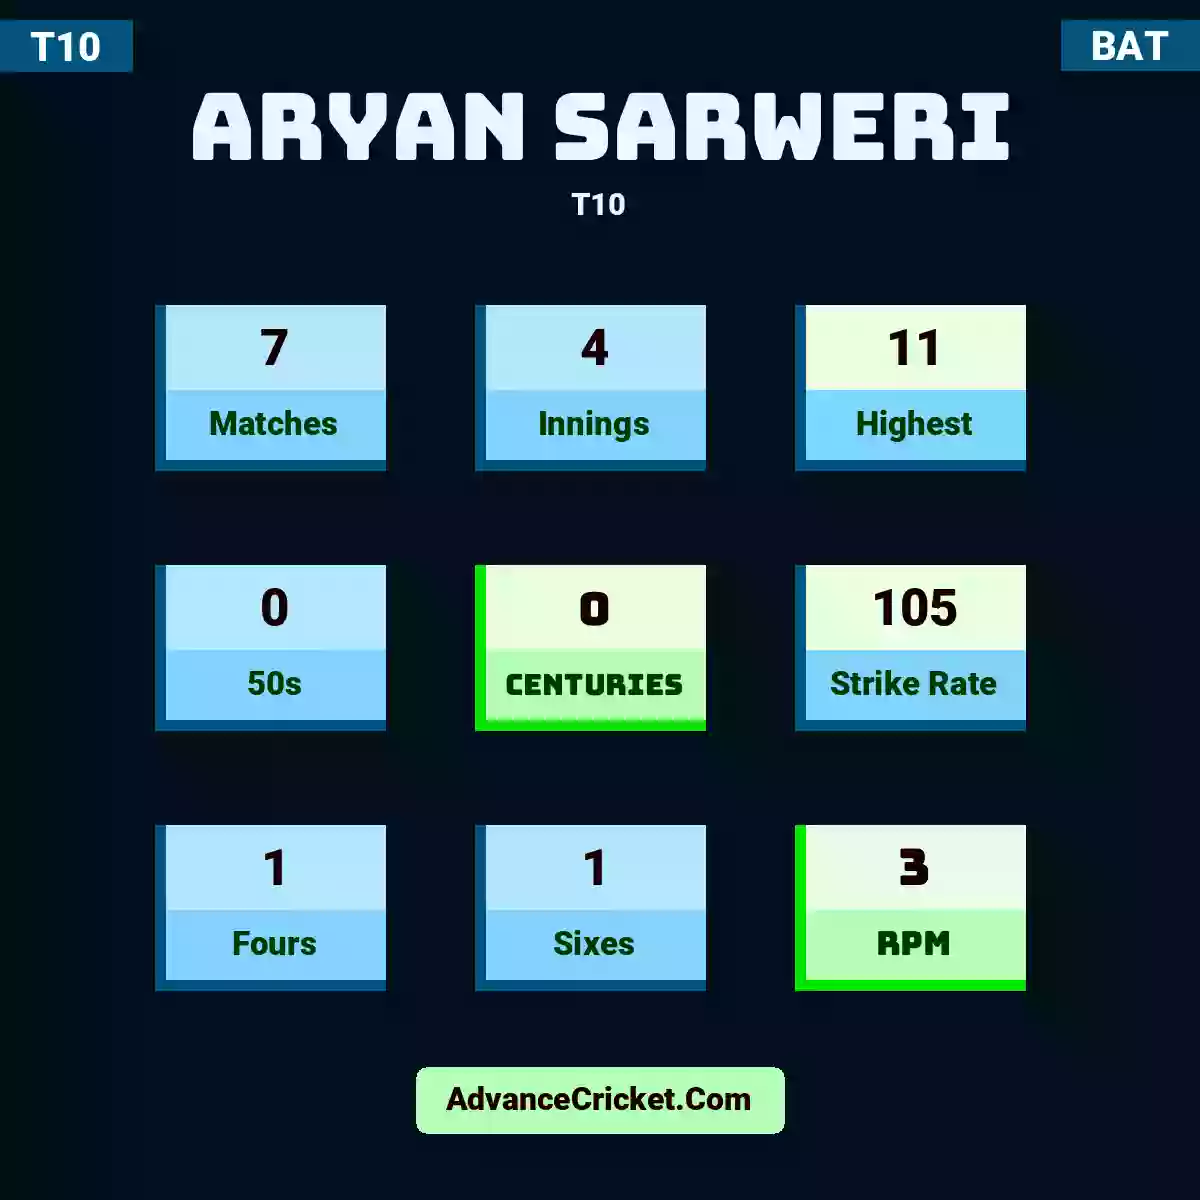 Aryan Sarweri T10 , Aryan Sarweri played 7 matches, scored 11 runs as highest, 0 half-centuries, and 0 centuries, with a strike rate of 105. A.Sarweri hit 1 fours and 1 sixes, with an RPM of 3.